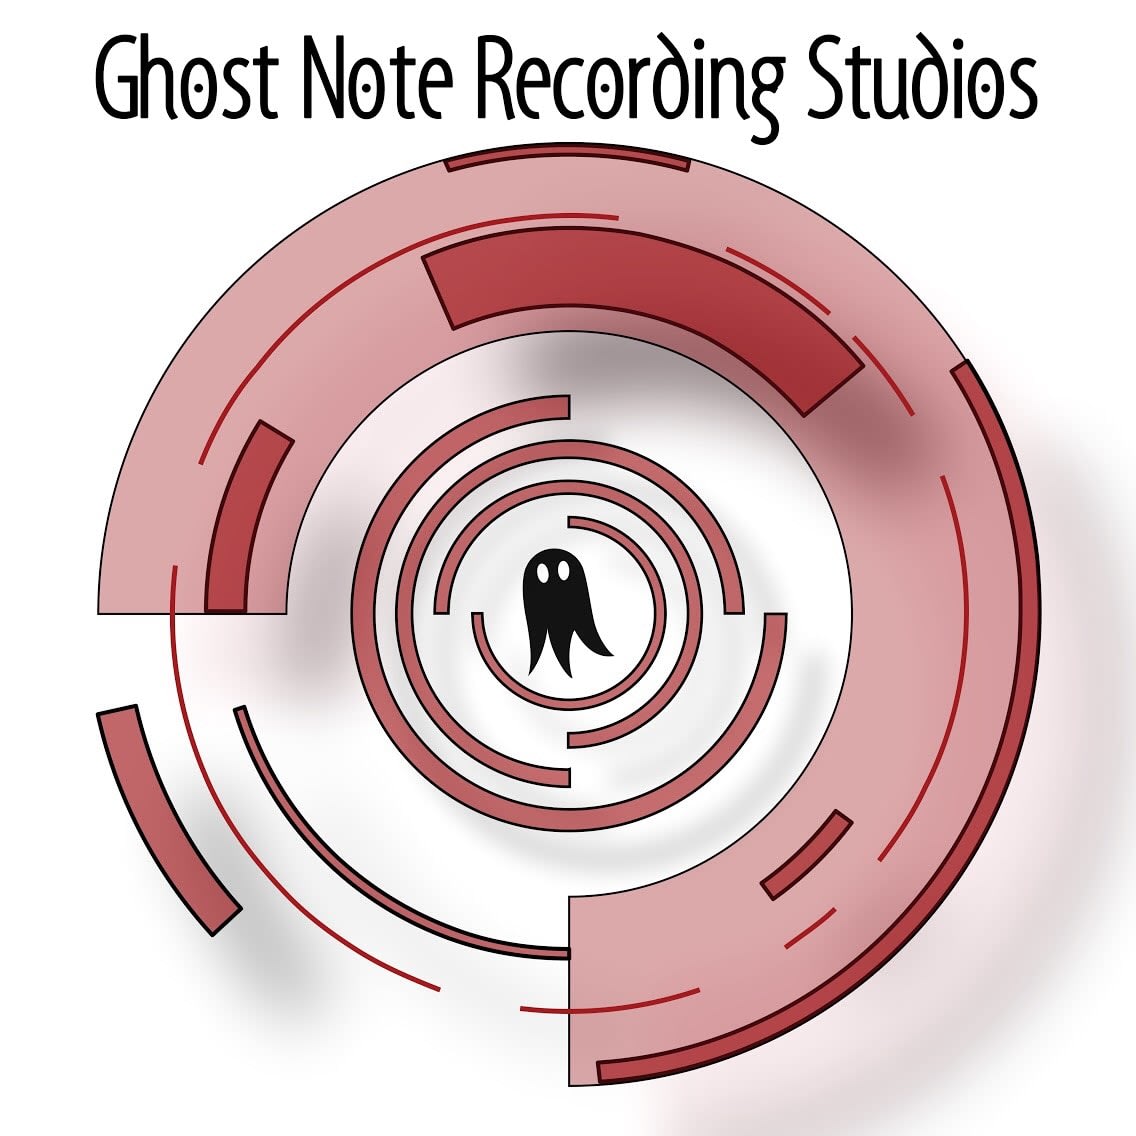 Ghost Note Recording Studios